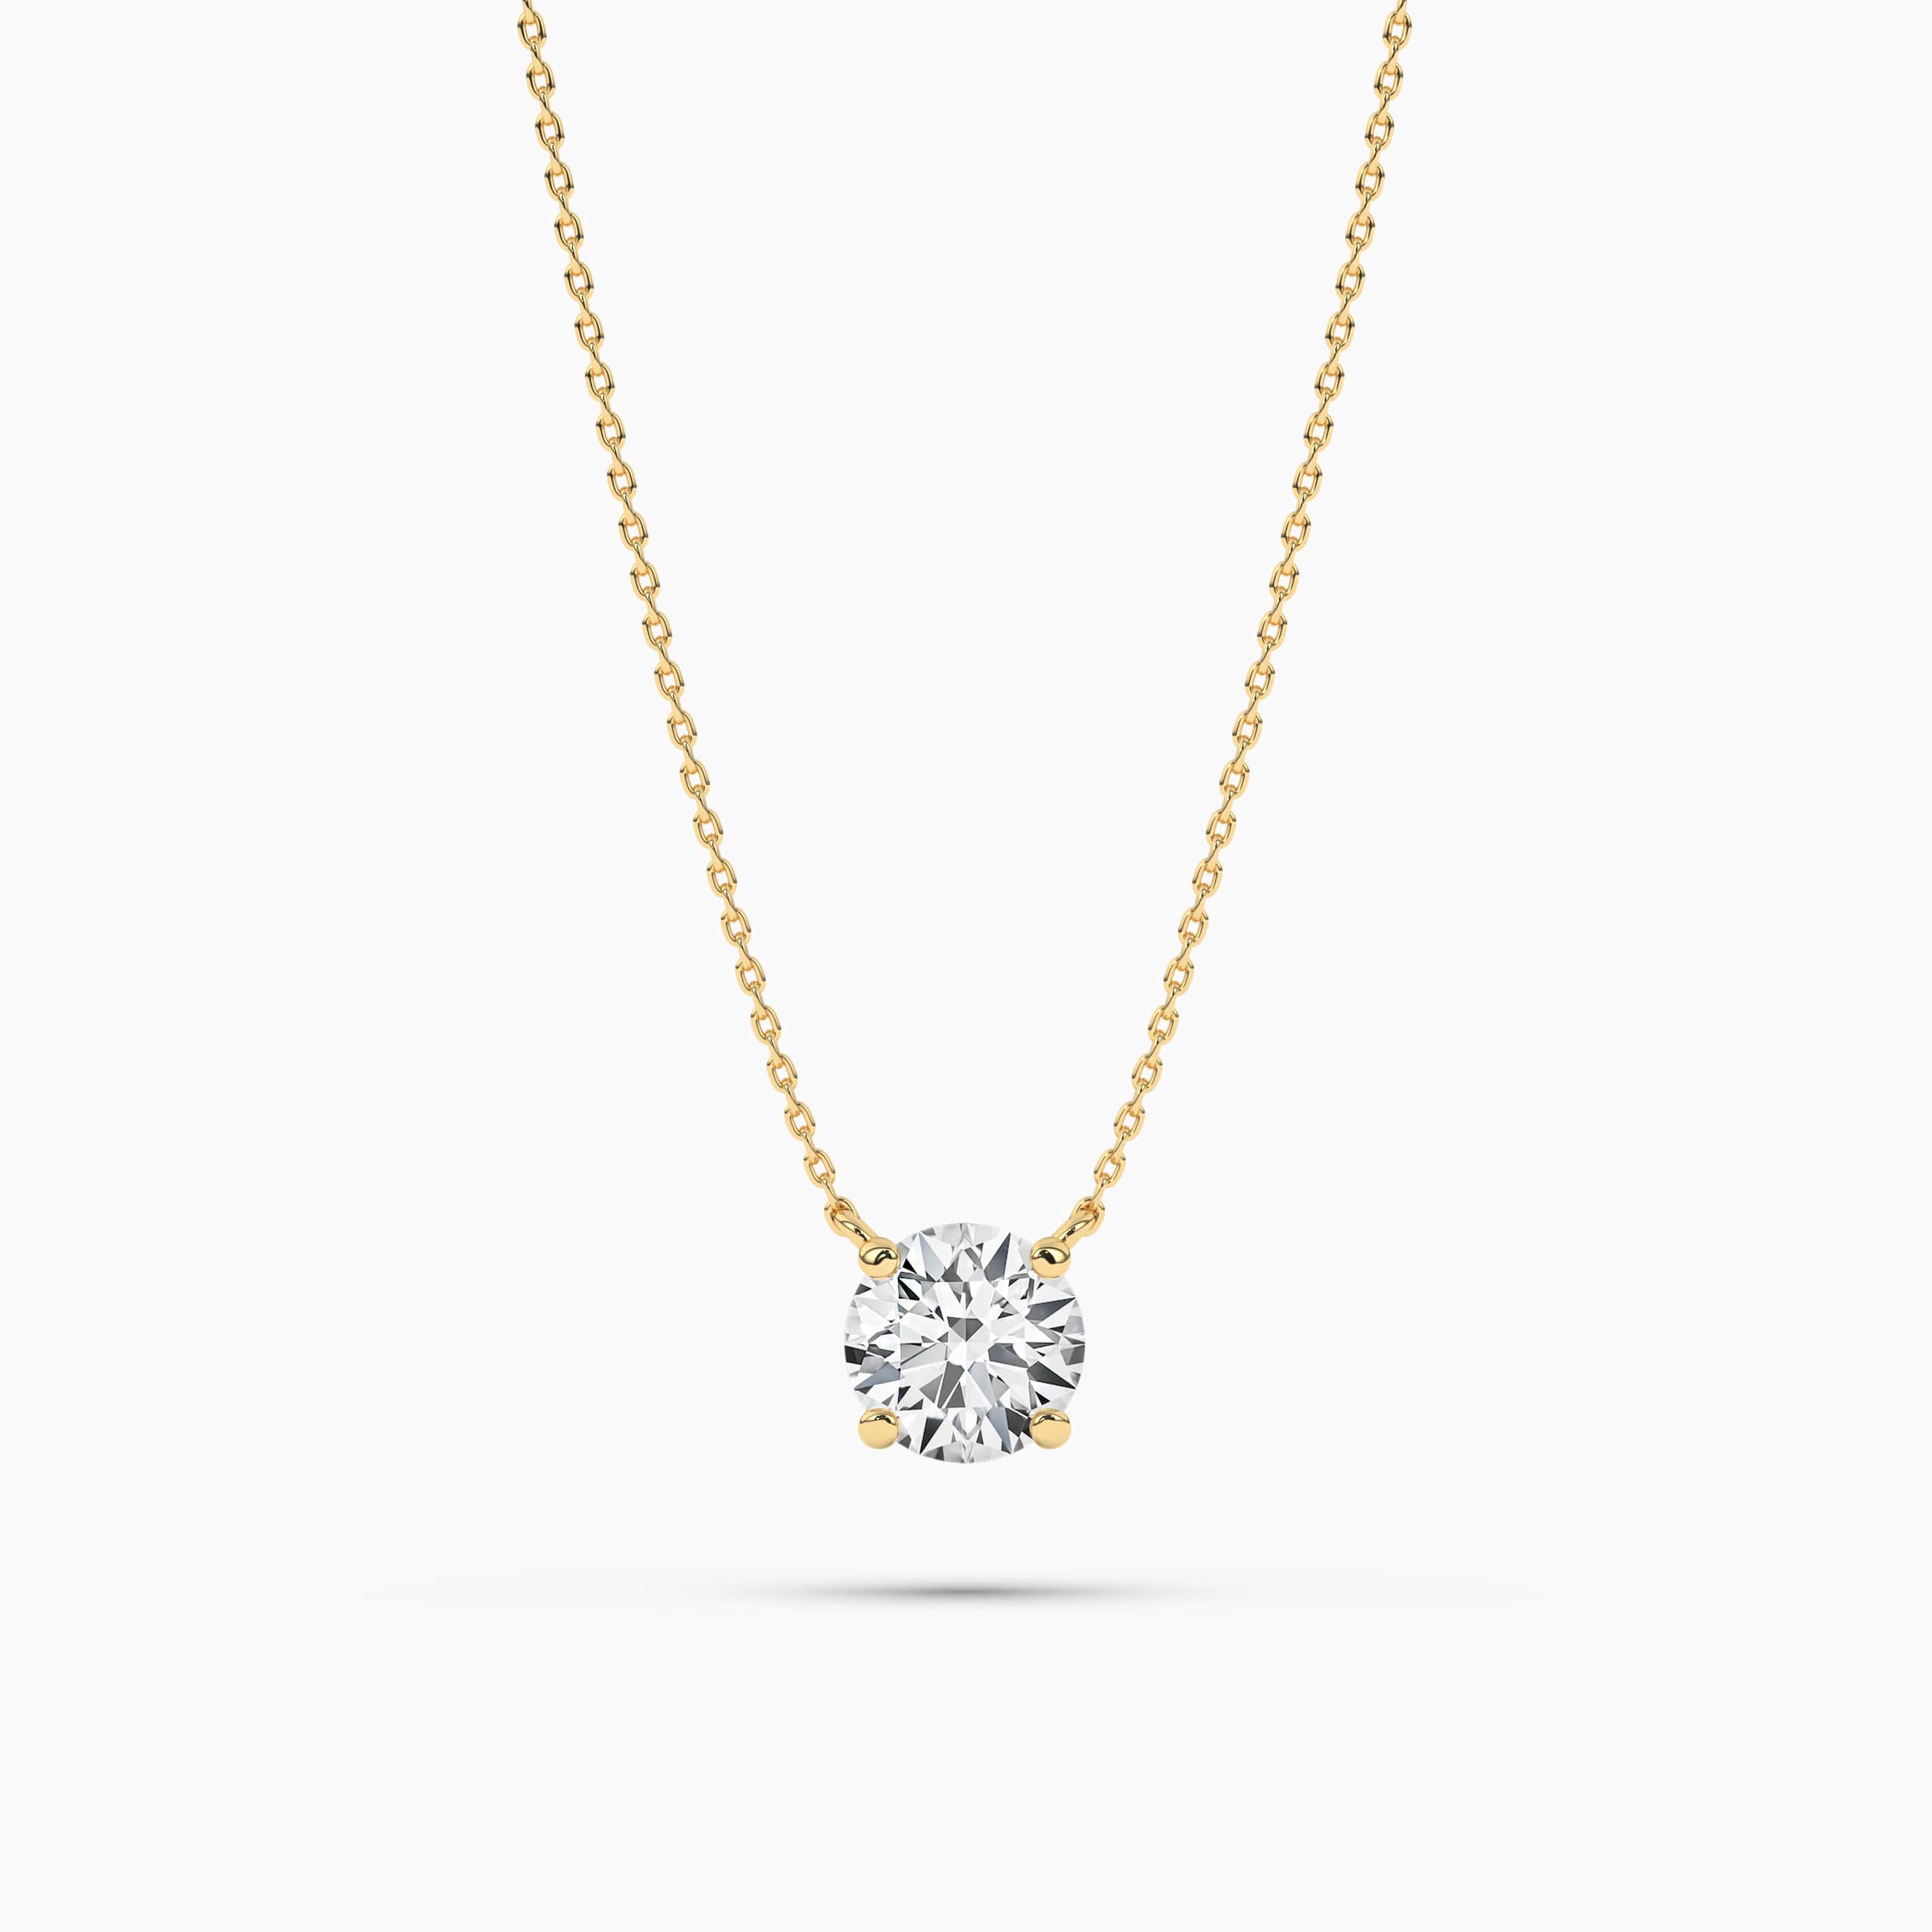  Round-Cut Diamond Solitaire 4-Prong Pendant Necklace